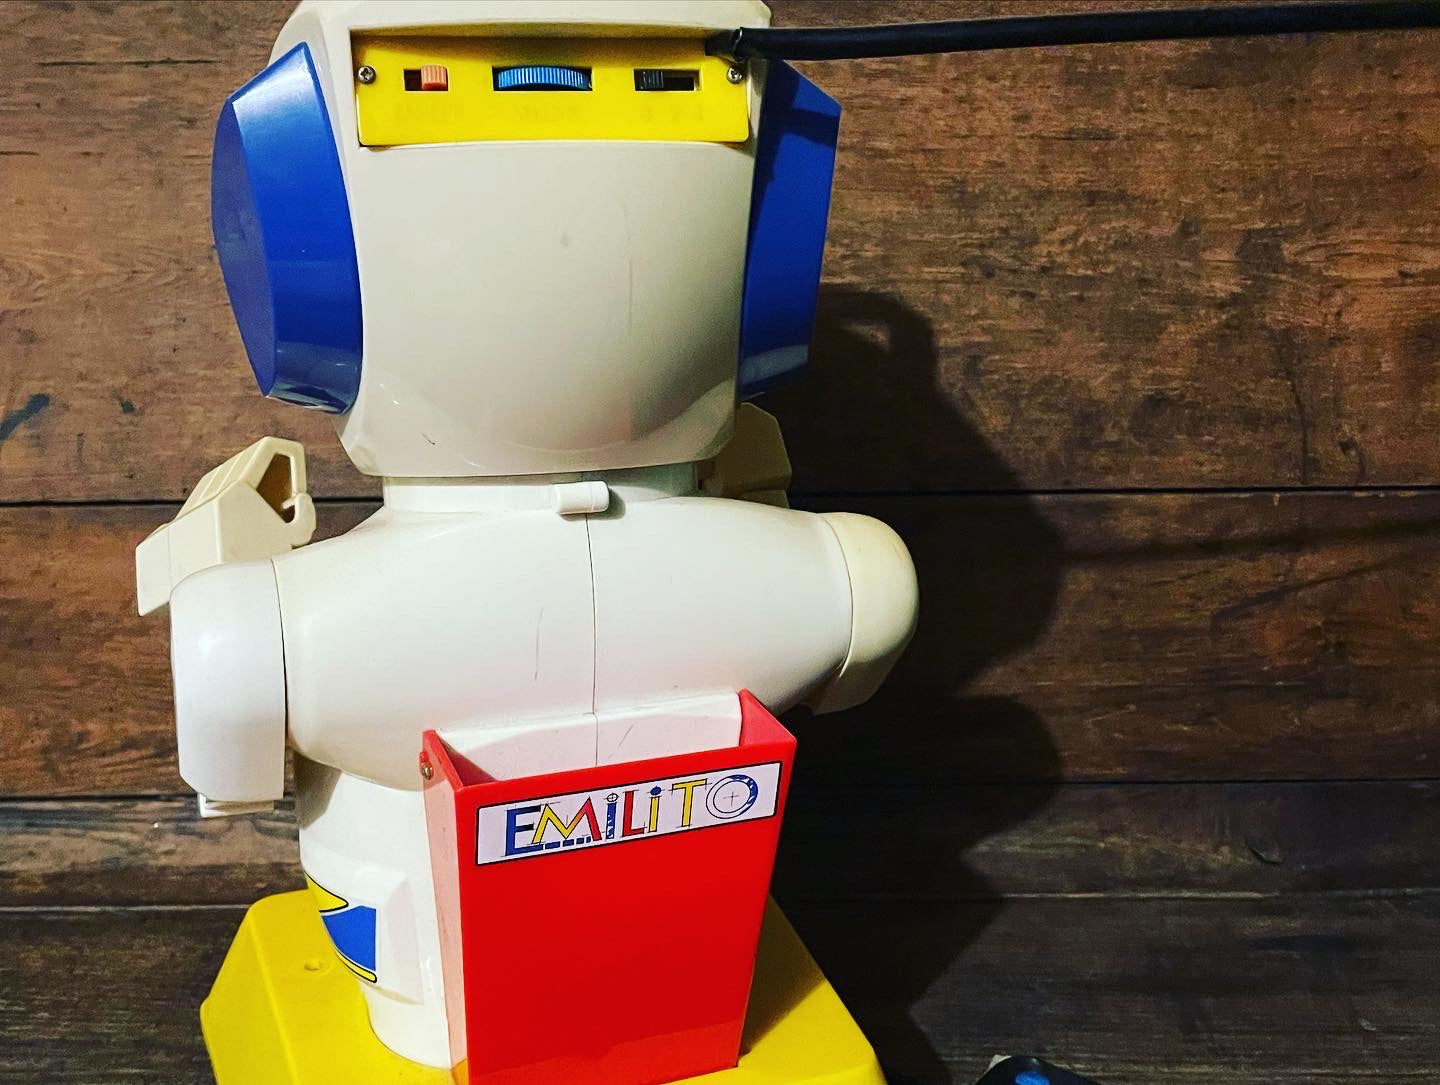 Emiglio robot – ModernariaMente